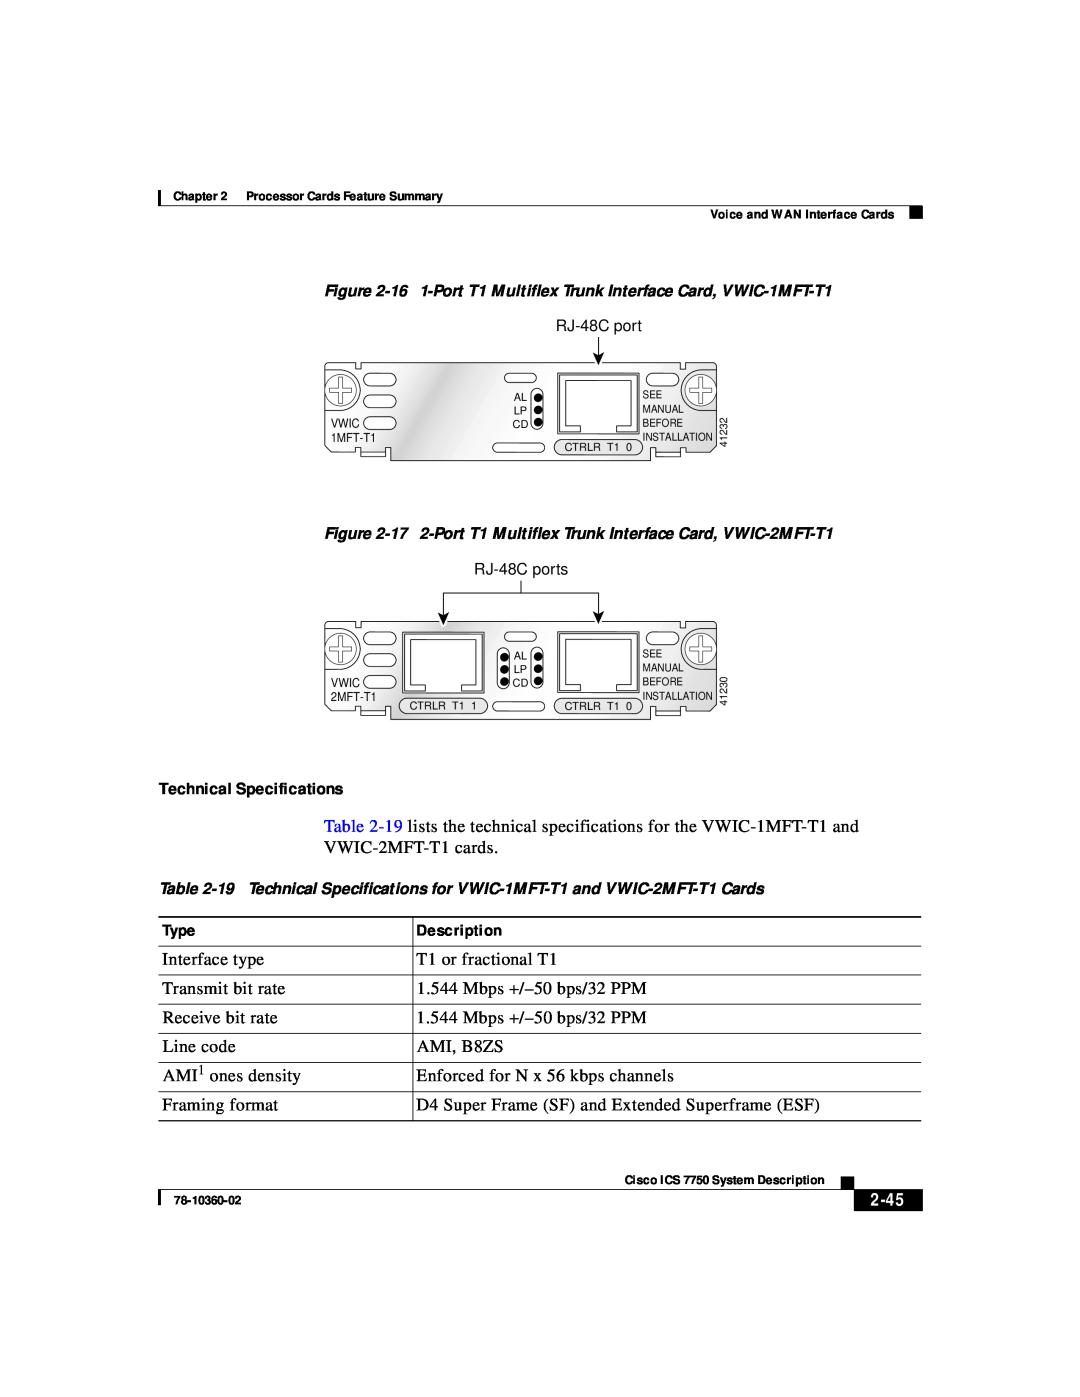 Cisco Systems ICS-7750 manual Technical Specifications, 2-45, 16 1-Port T1 Multiflex Trunk Interface Card, VWIC-1MFT-T1 